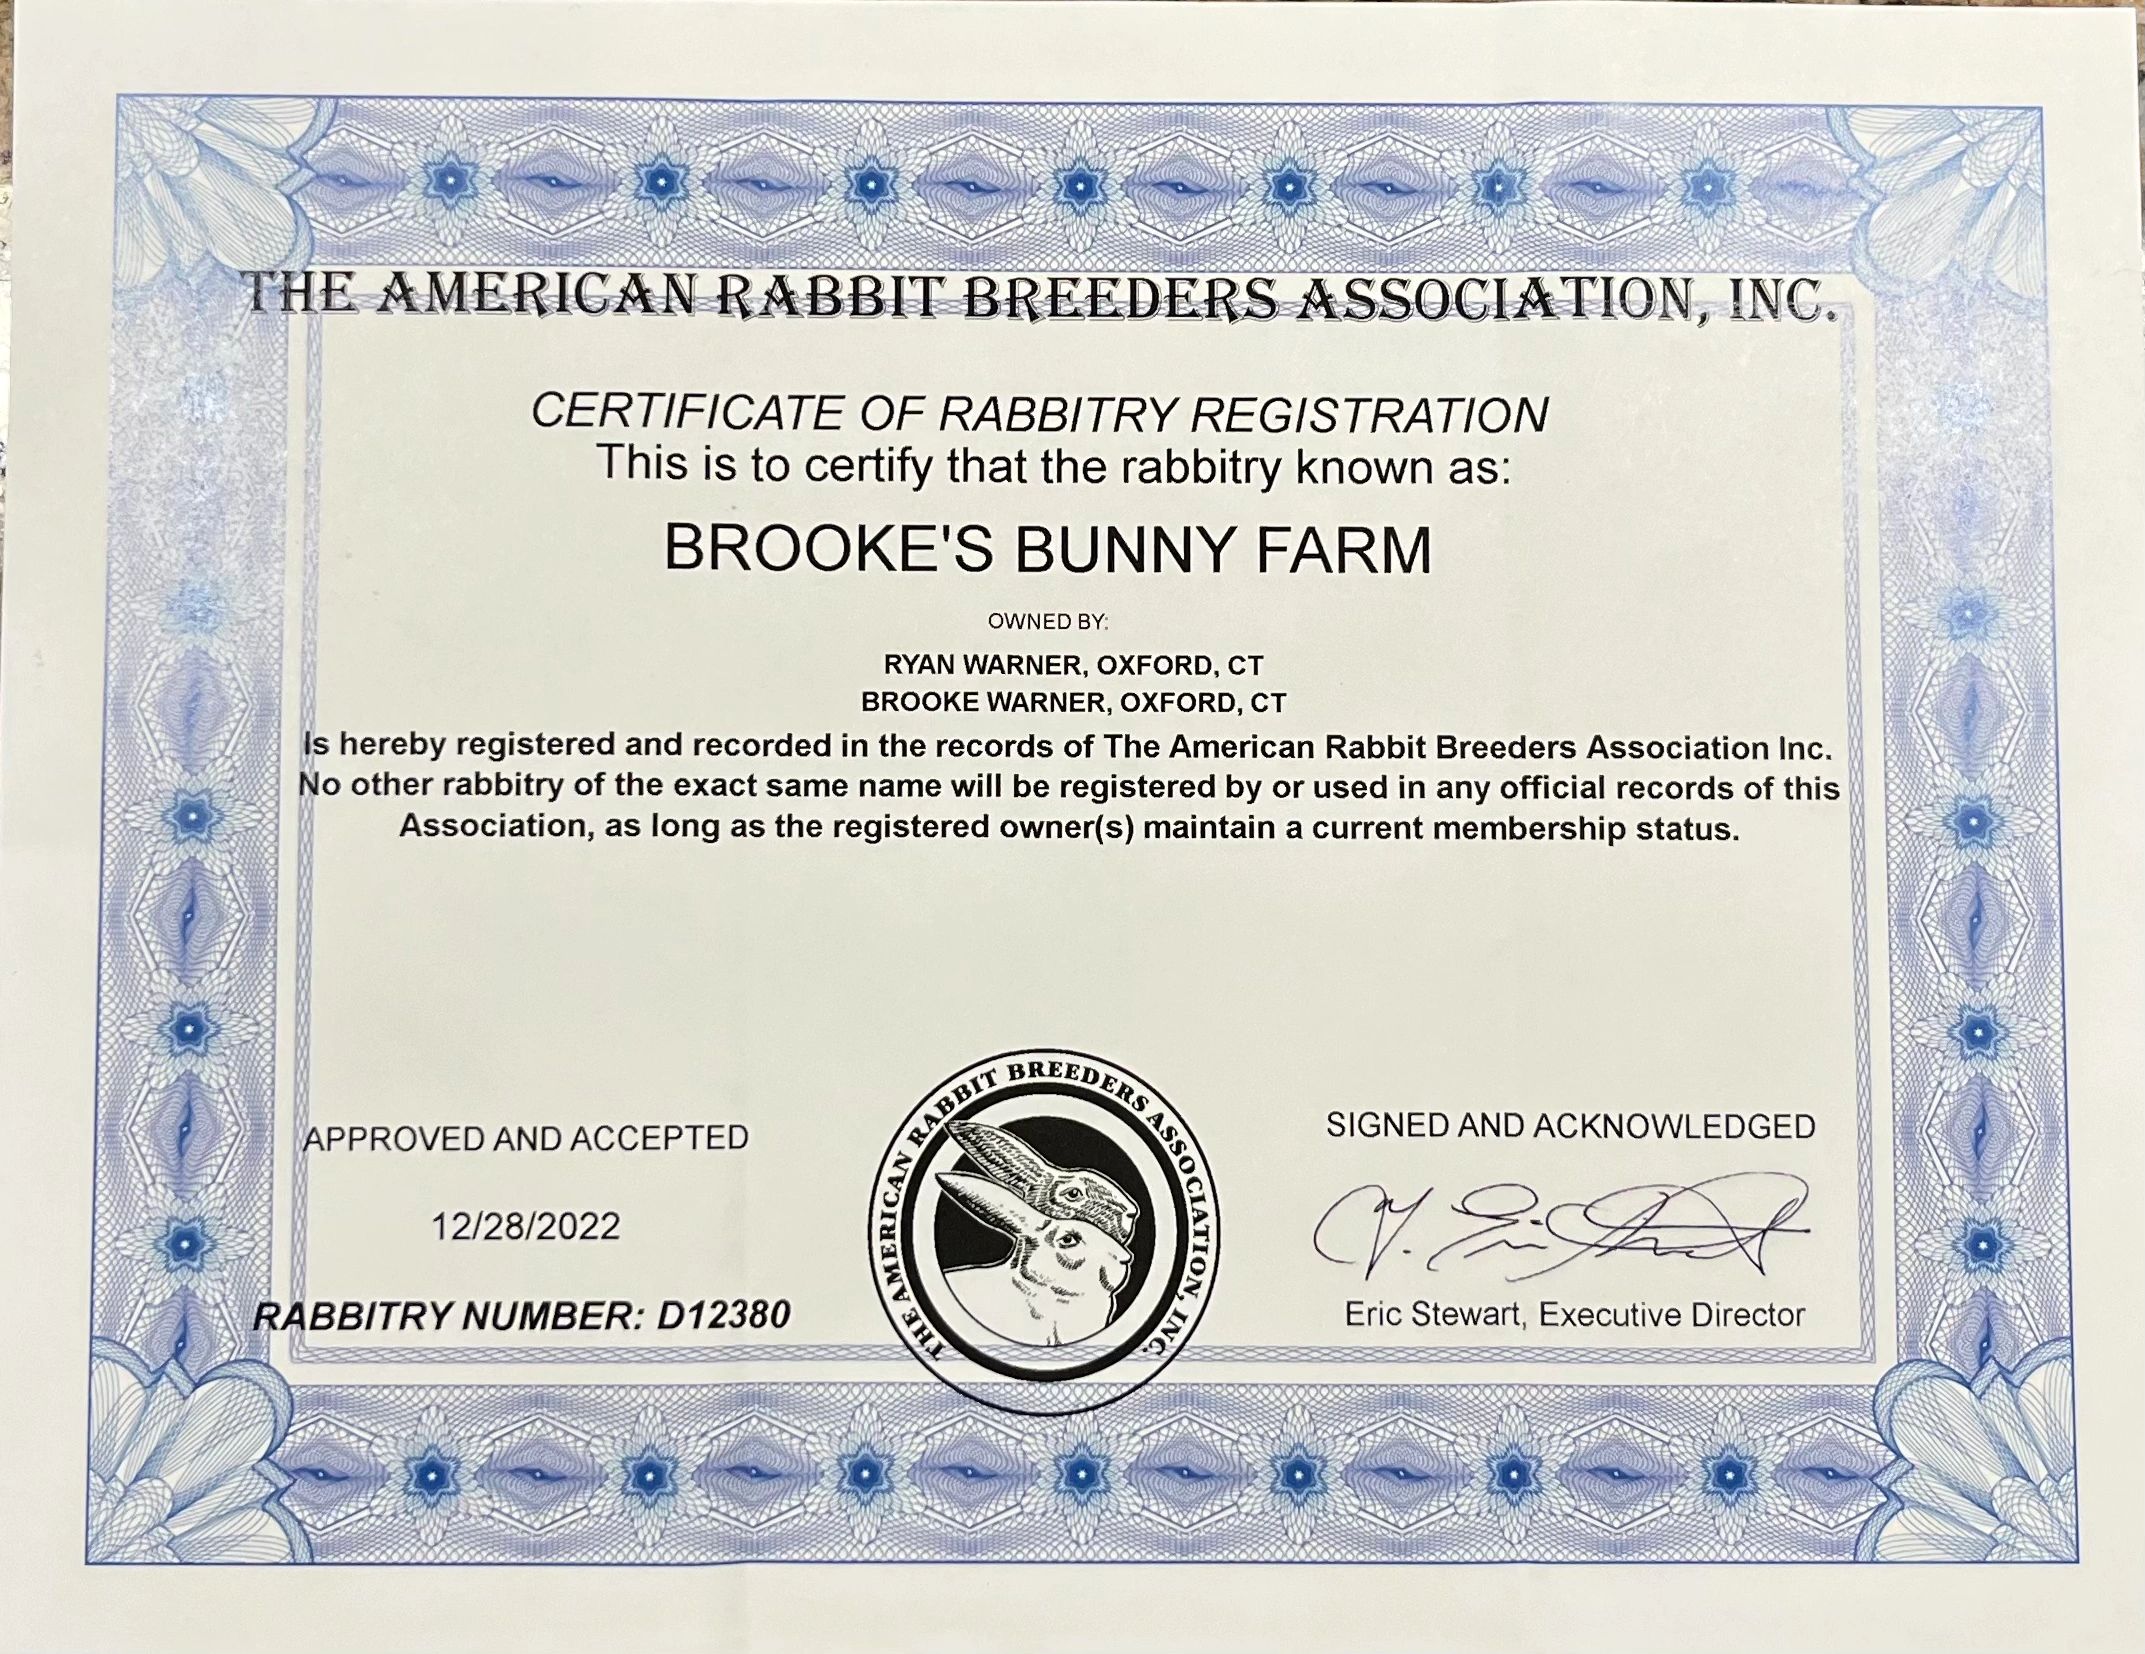 Certificate of rabbitry registration through the American rabbit breeders association Inc.